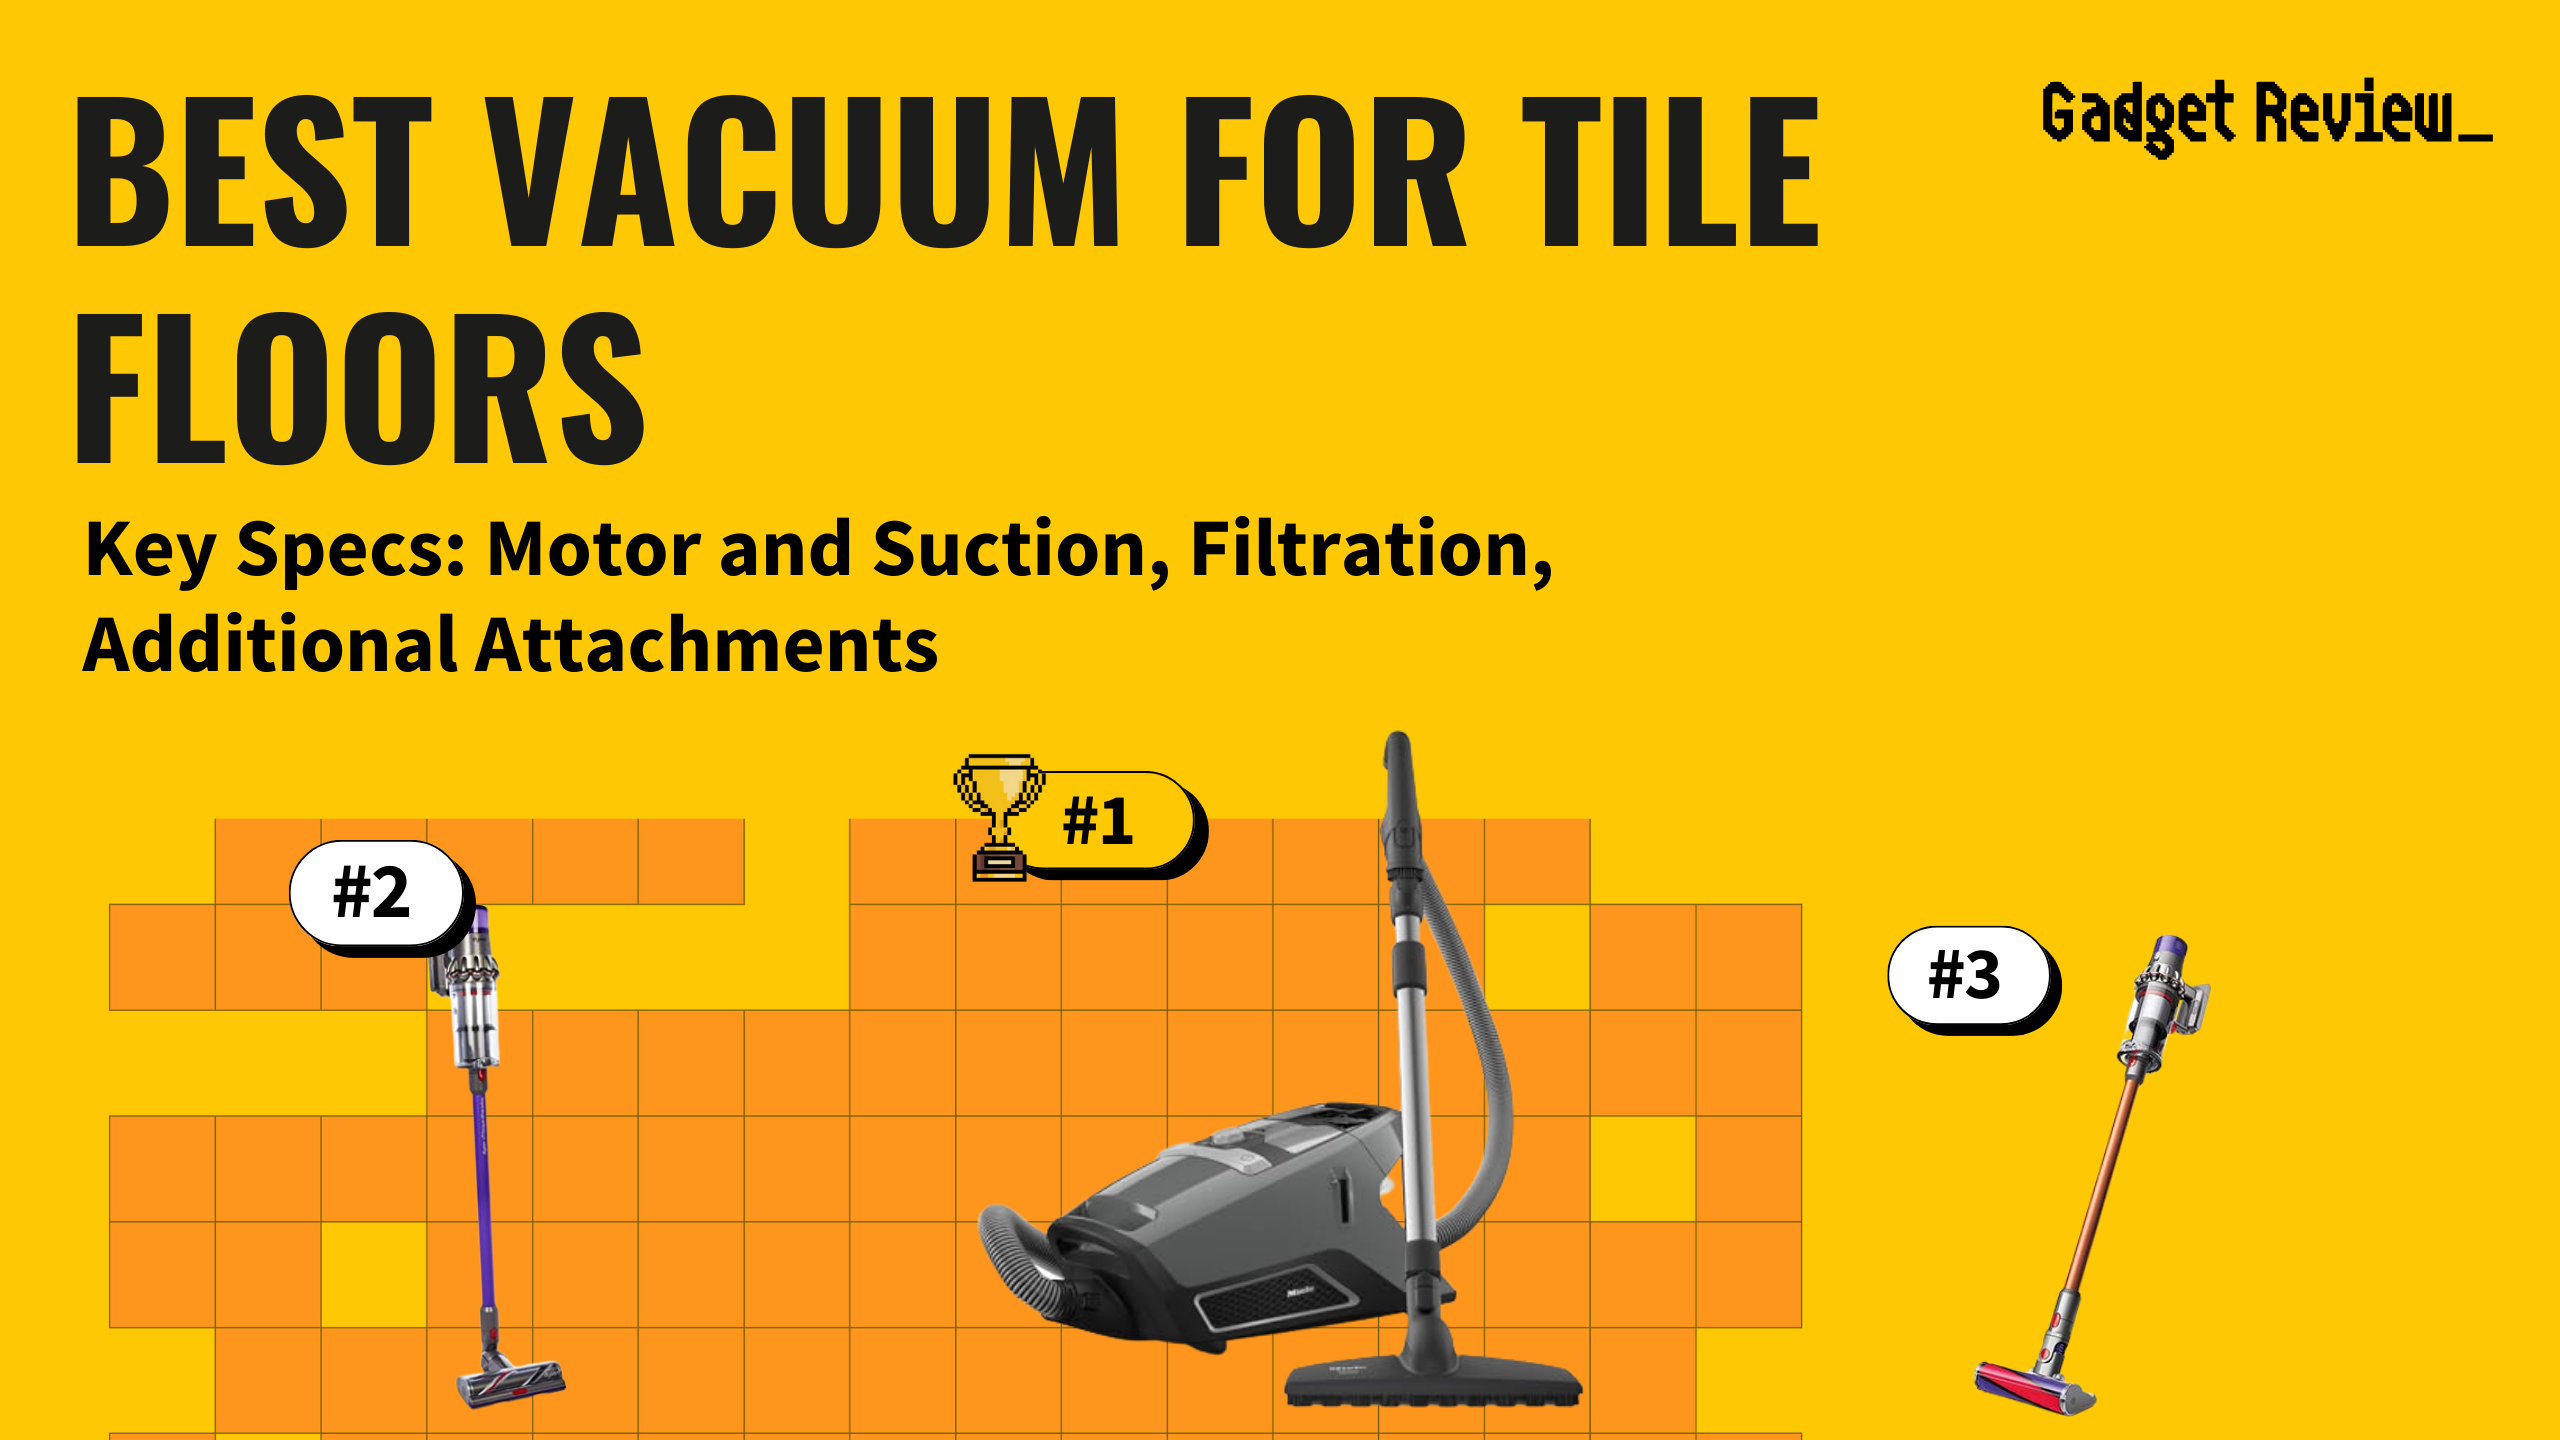 best vacuums tile floors guide that shows the top best vacuum cleaner model